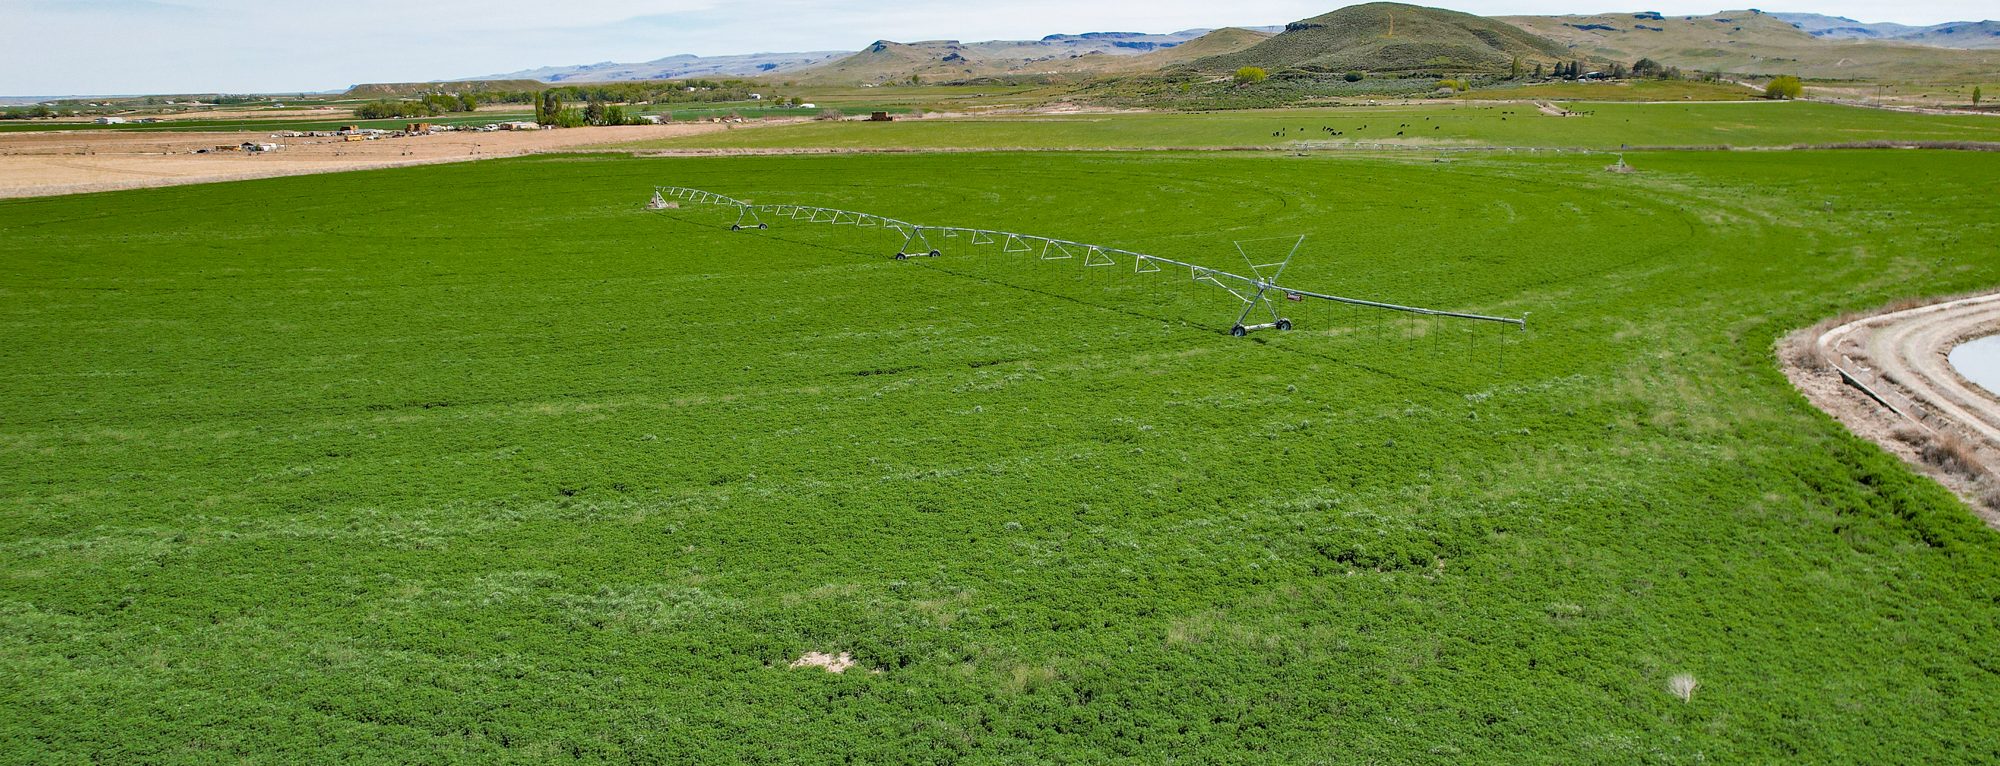 Homedale Alfalfa Farm irrigation pivot and Owyhee mountain views